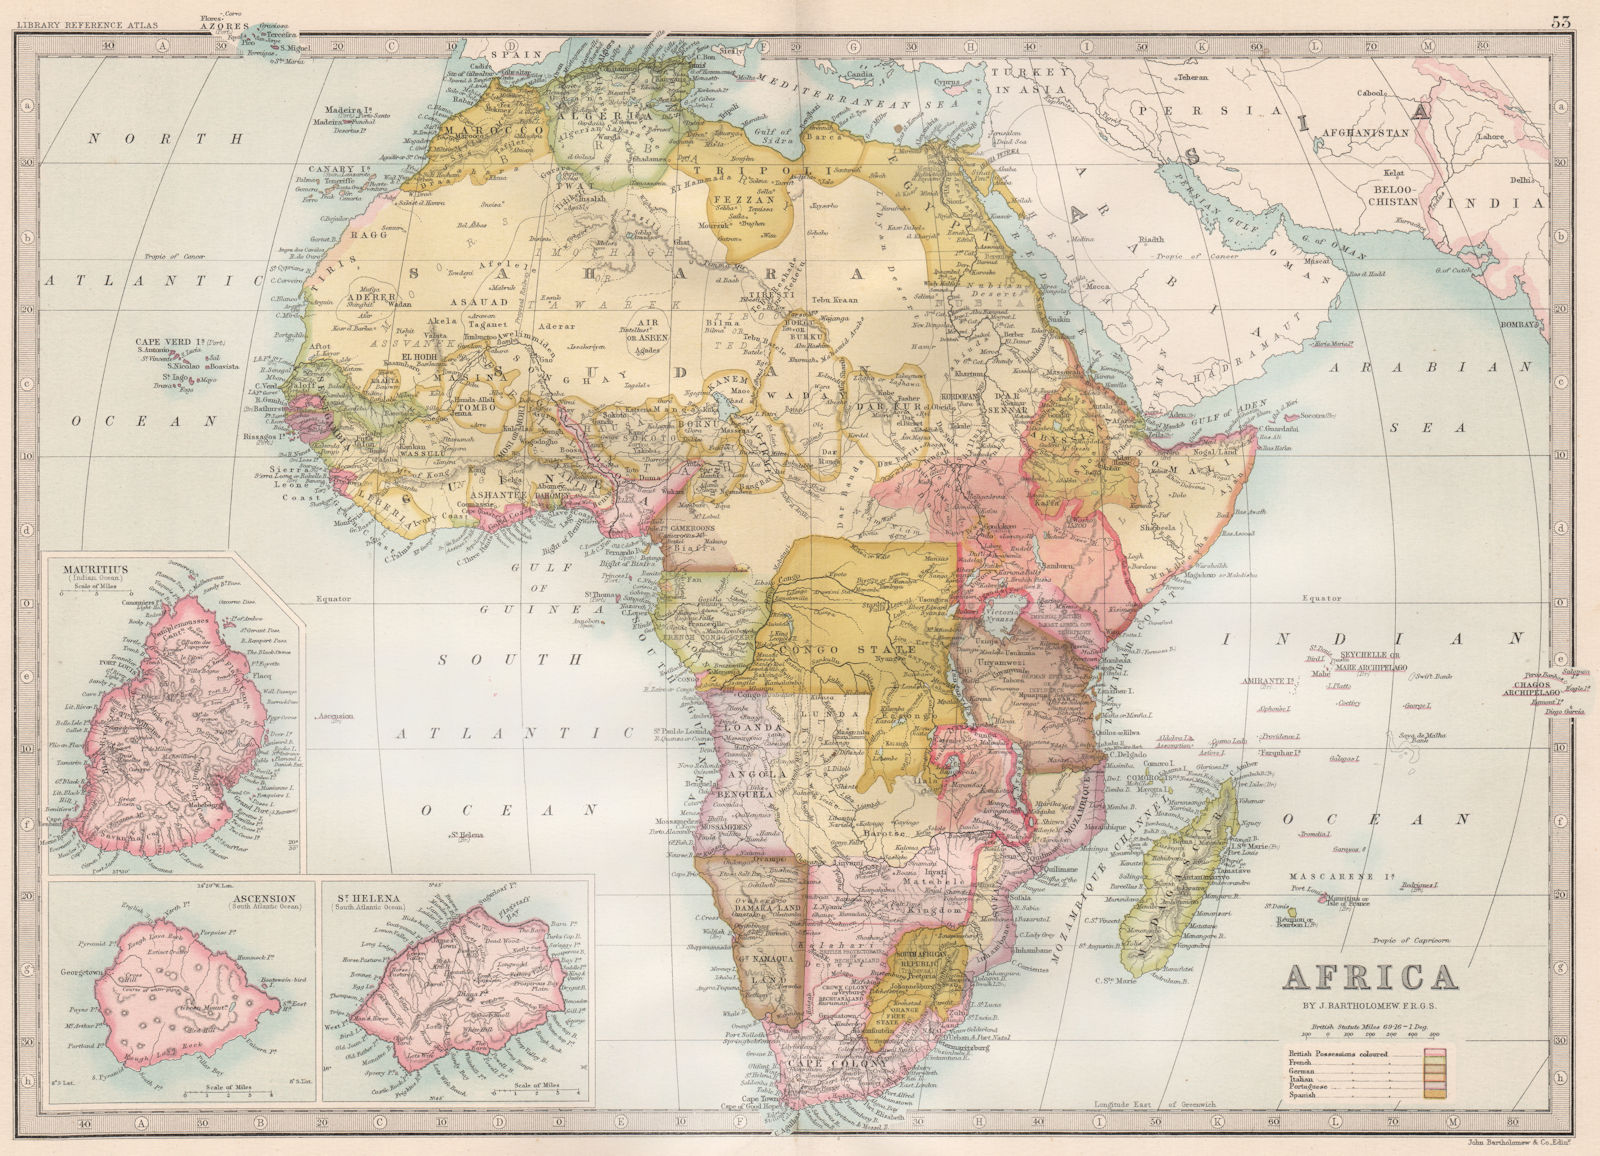 AFRICA.many unresolved borders.S Kenya=British East Africa Co Territory 1890 map